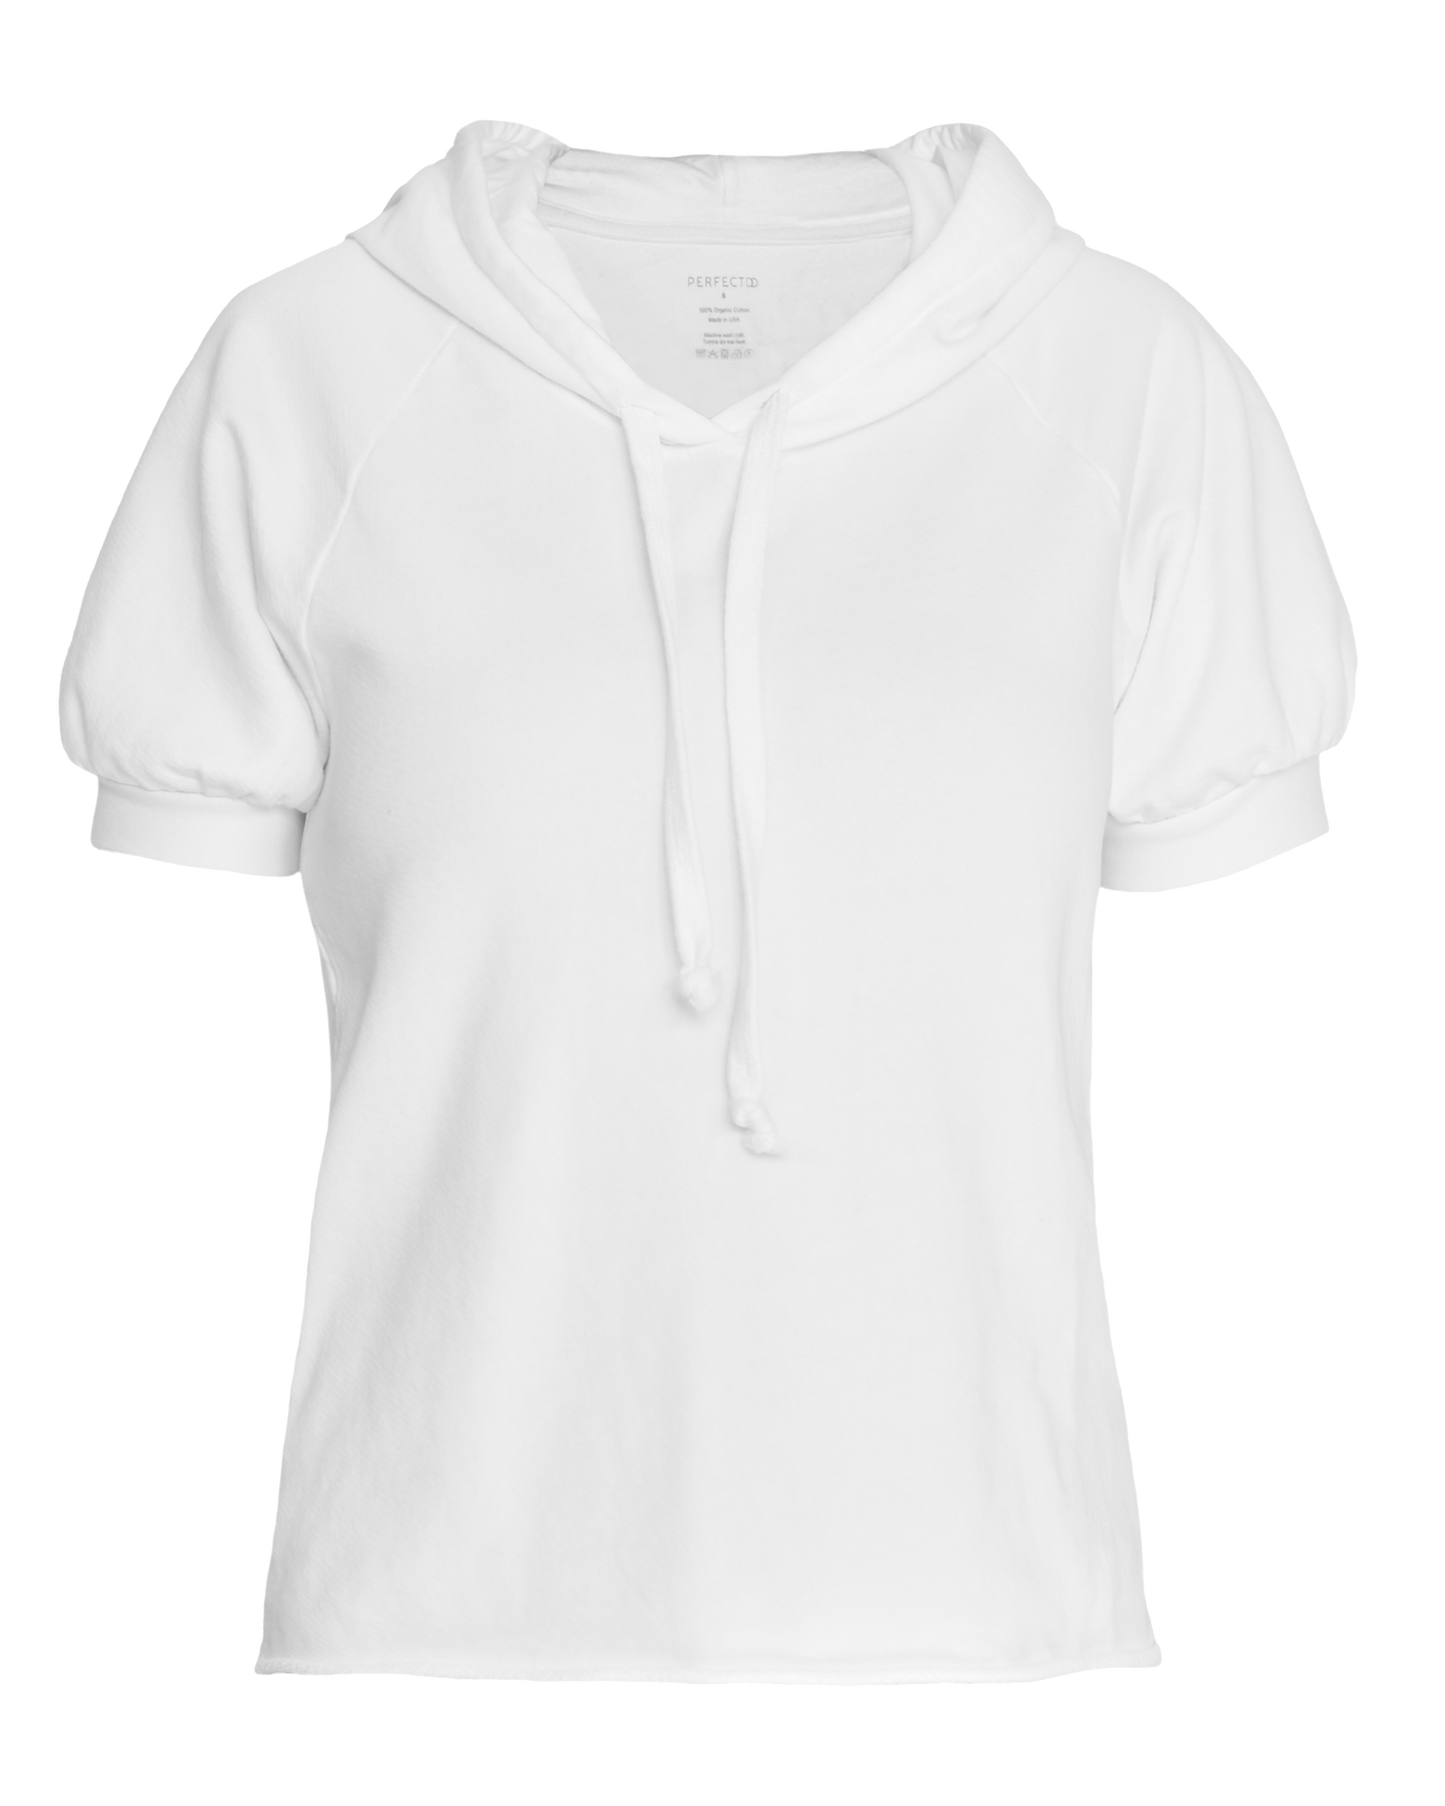 Flat lay of white cotton short sleeve sweatshirt